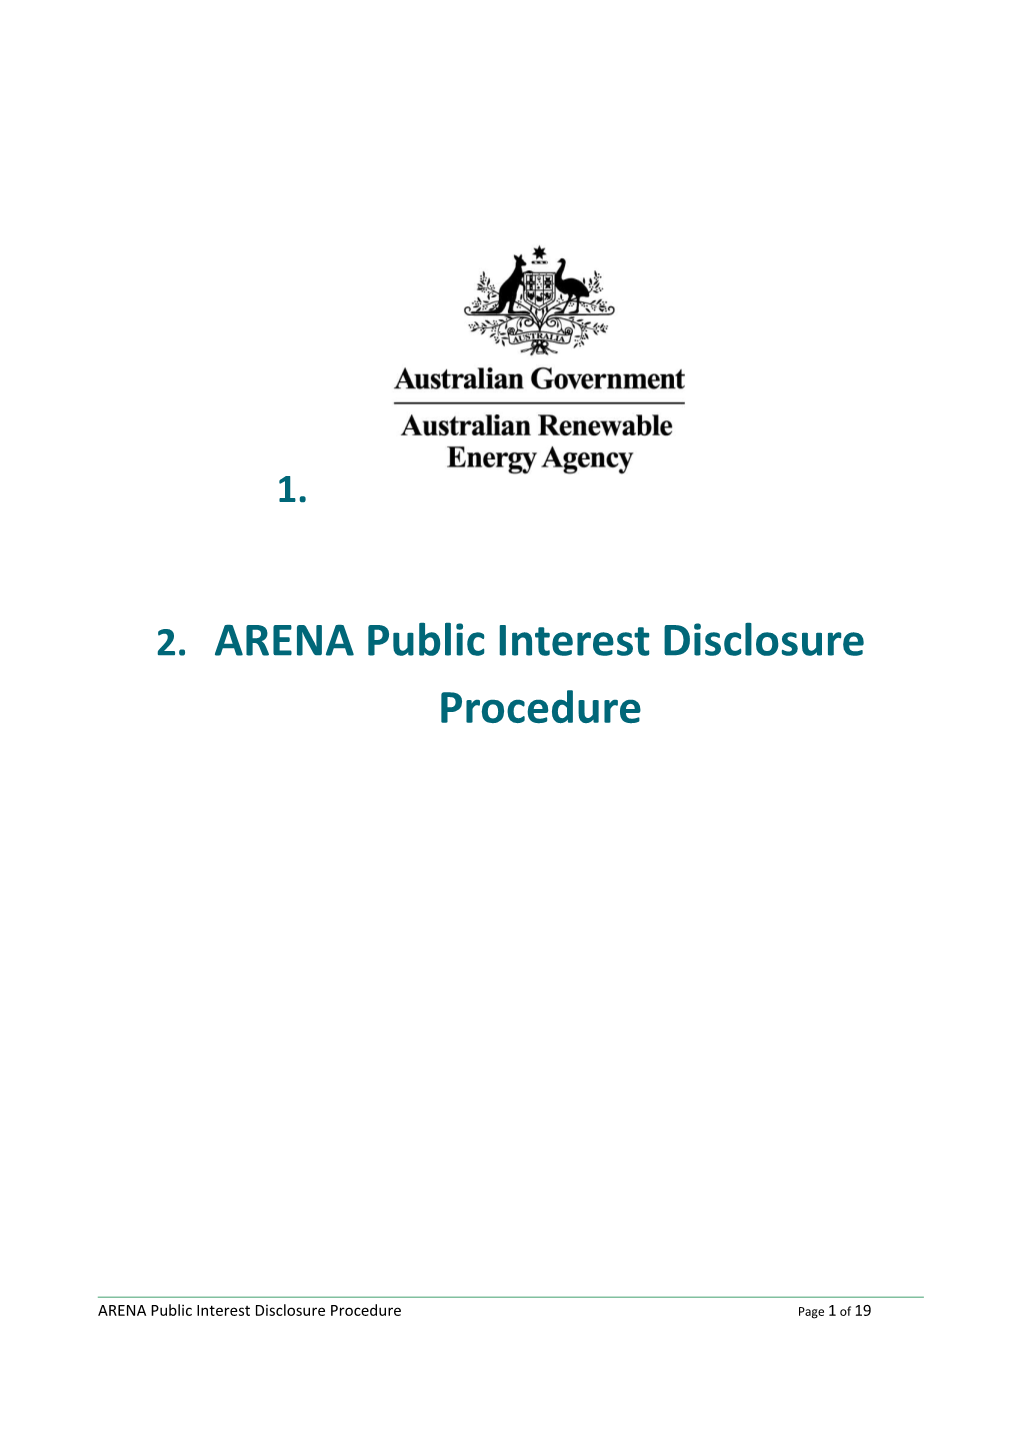 ARENA Public Interest Disclosure Procedure